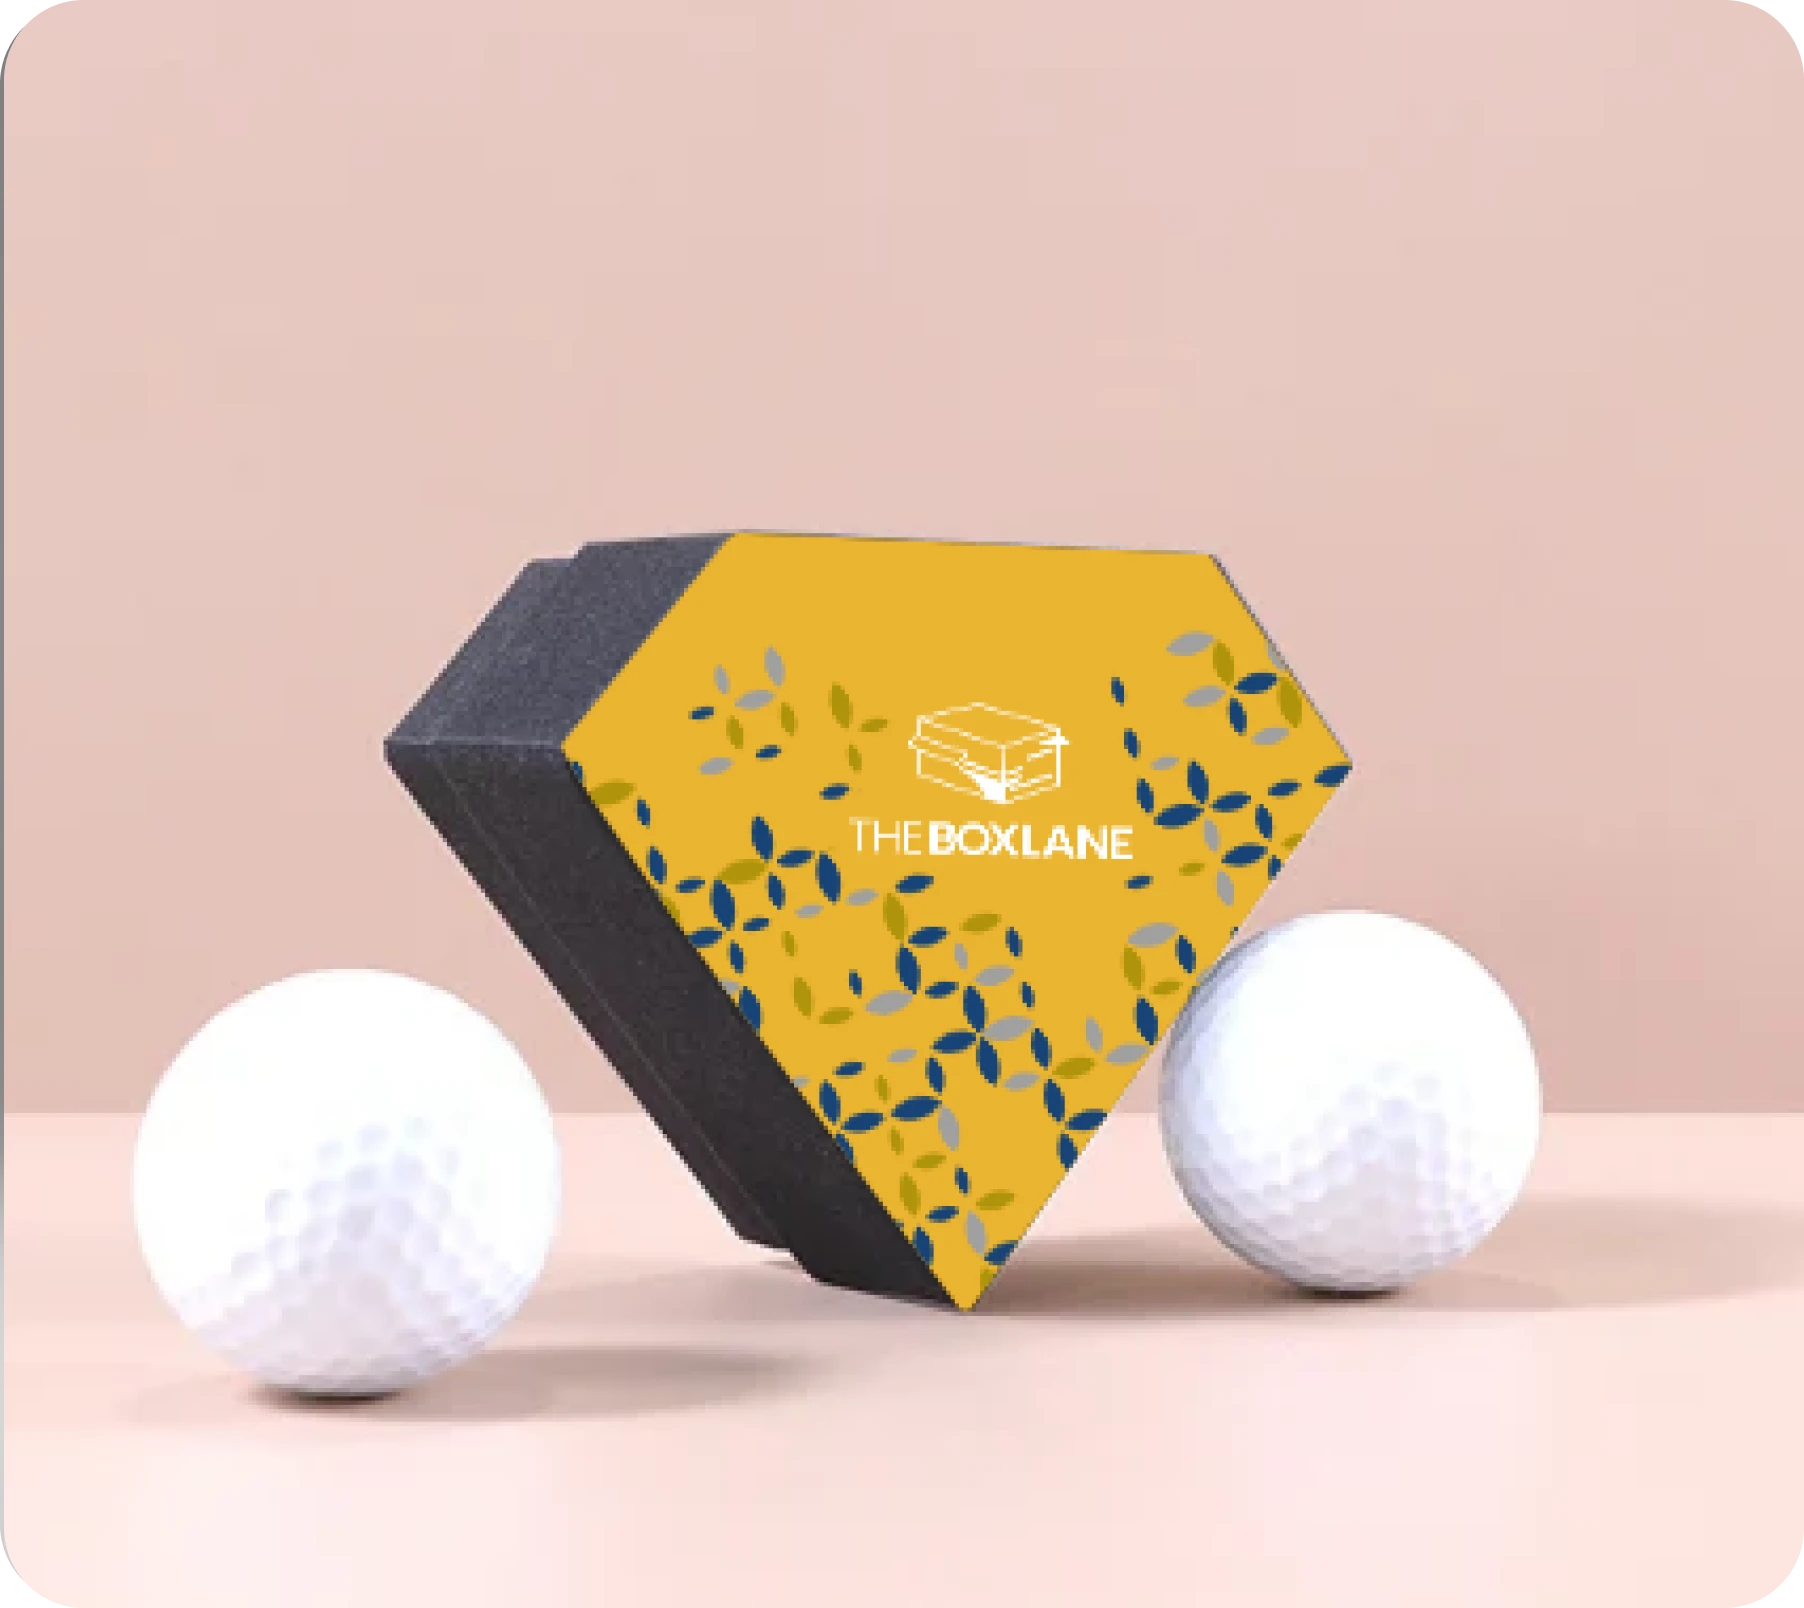 Choose The Box Lane for Golf Ball Packaging | The Box Lane